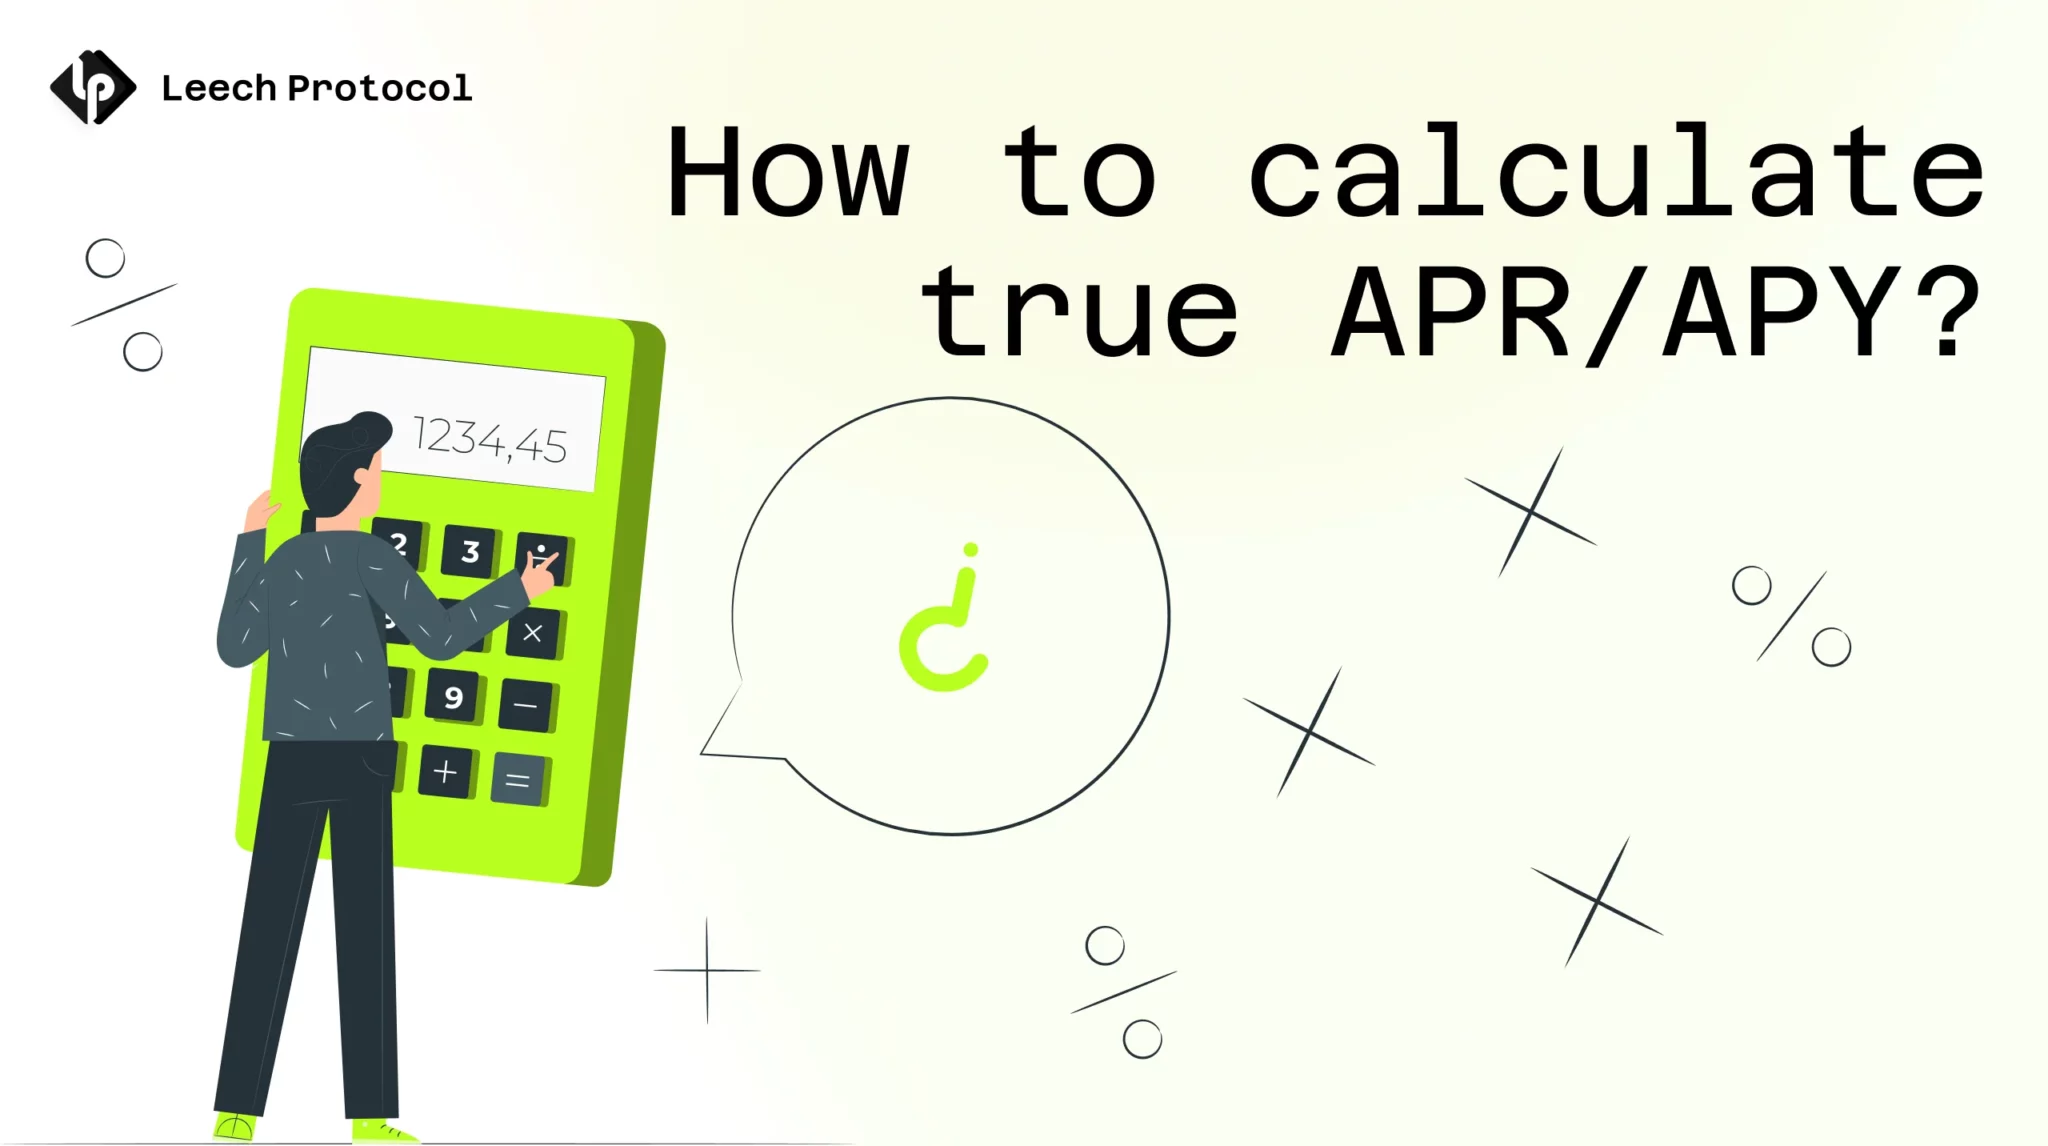 How to calculate true APR/APY?